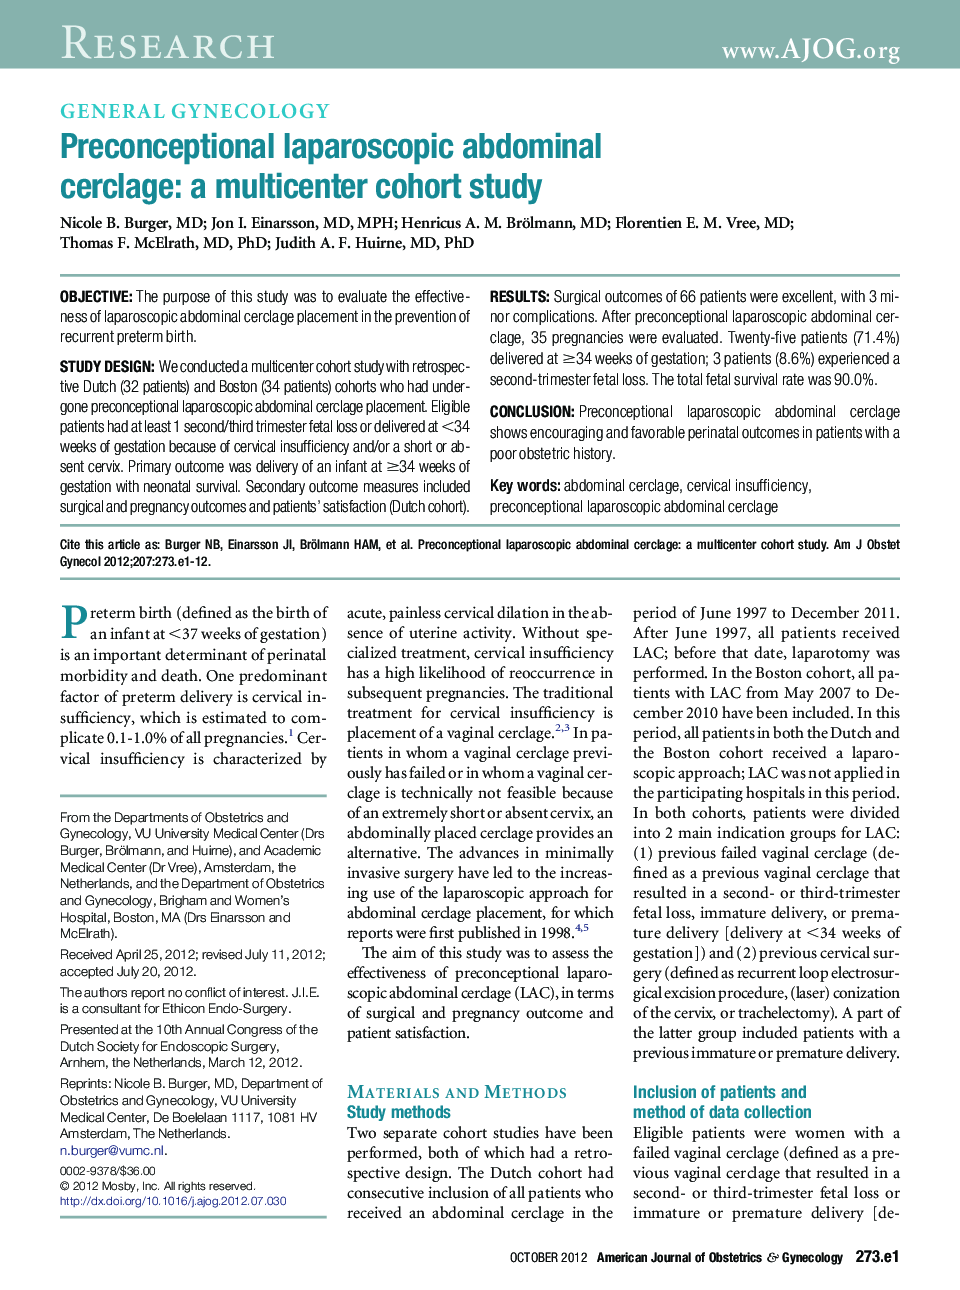 Preconceptional laparoscopic abdominal cerclage: a multicenter cohort study